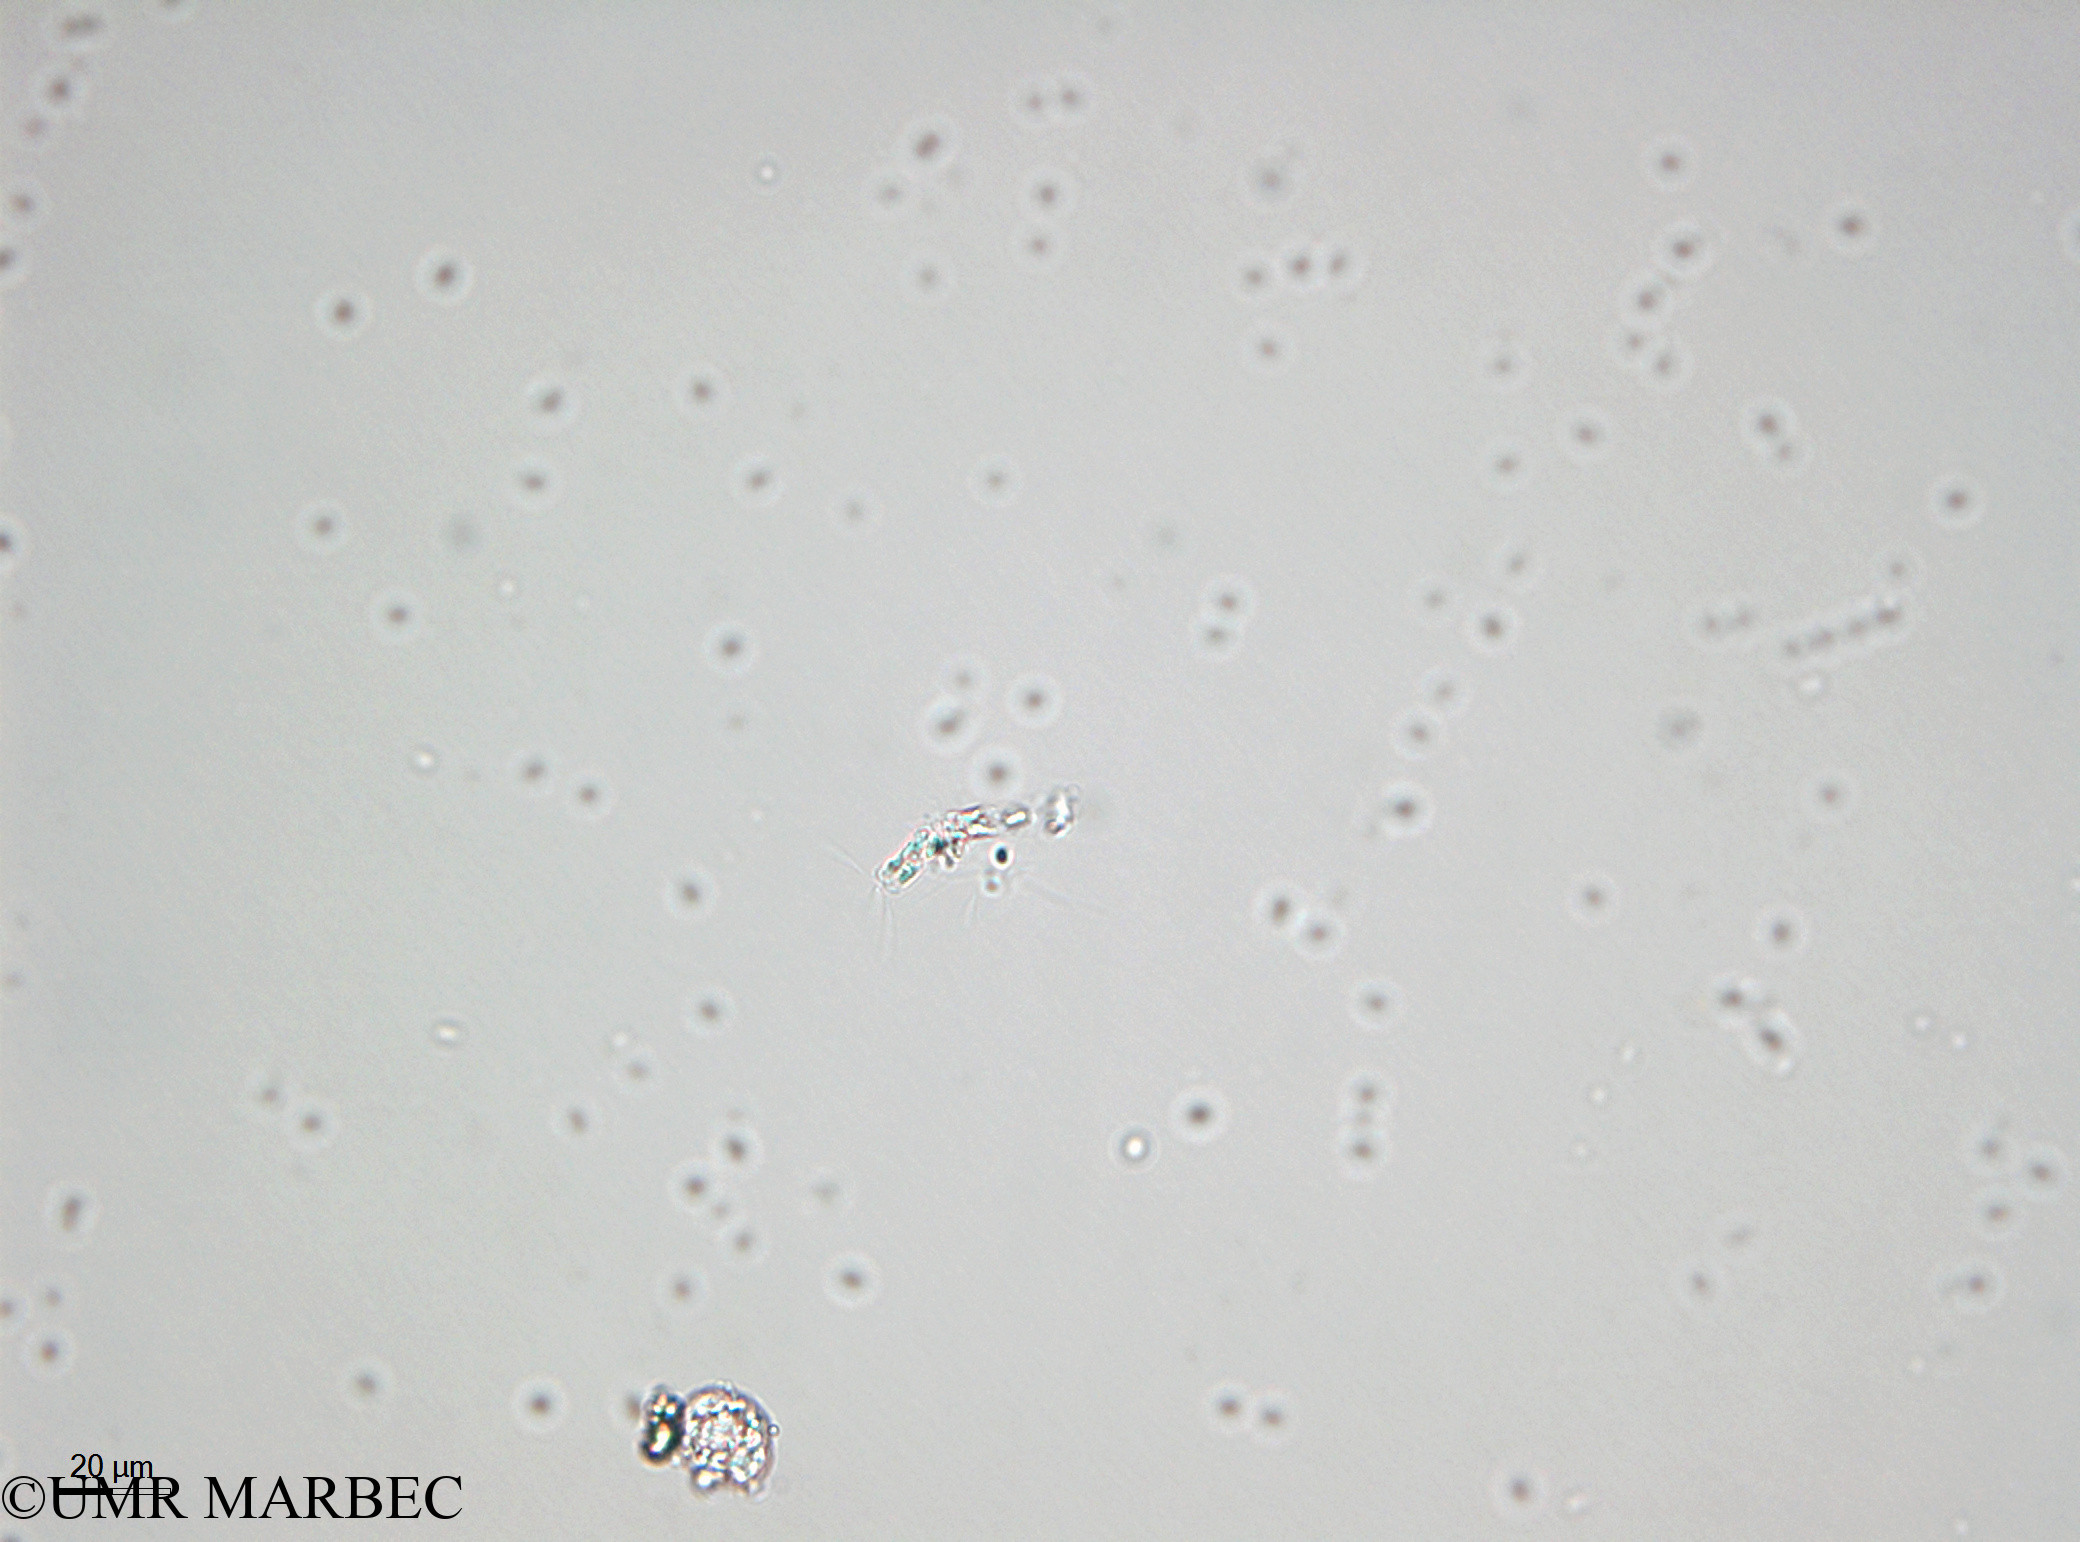 phyto/Bizerte/bizerte_bay/RISCO April 2014/Bacteriastrum sp4 (140728_001_ovl-3).tif(copy).jpg